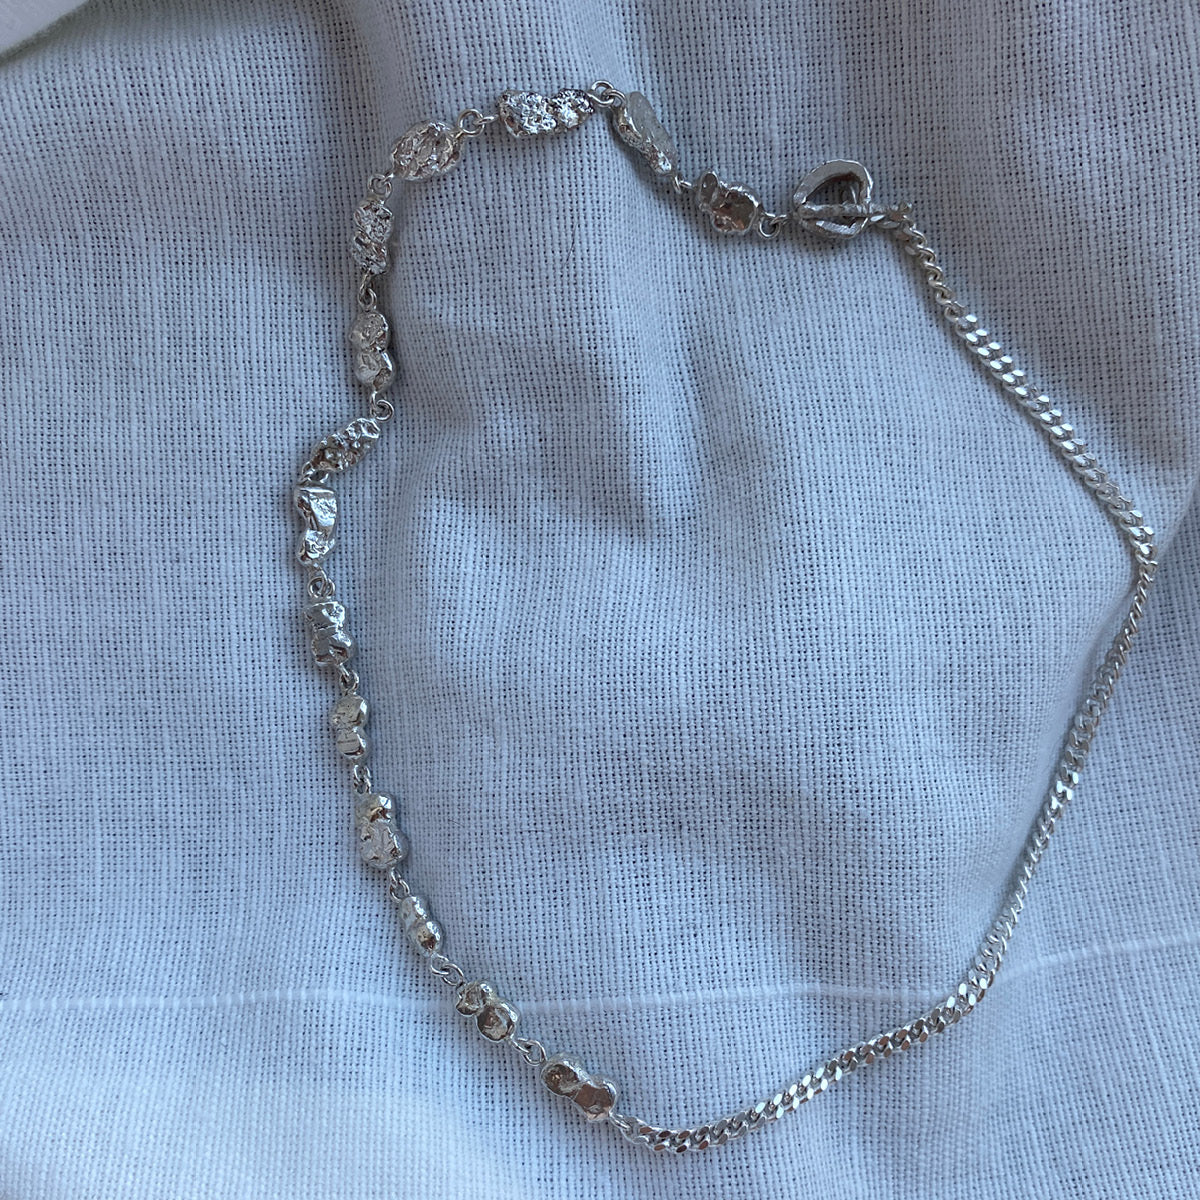 Lava necklace